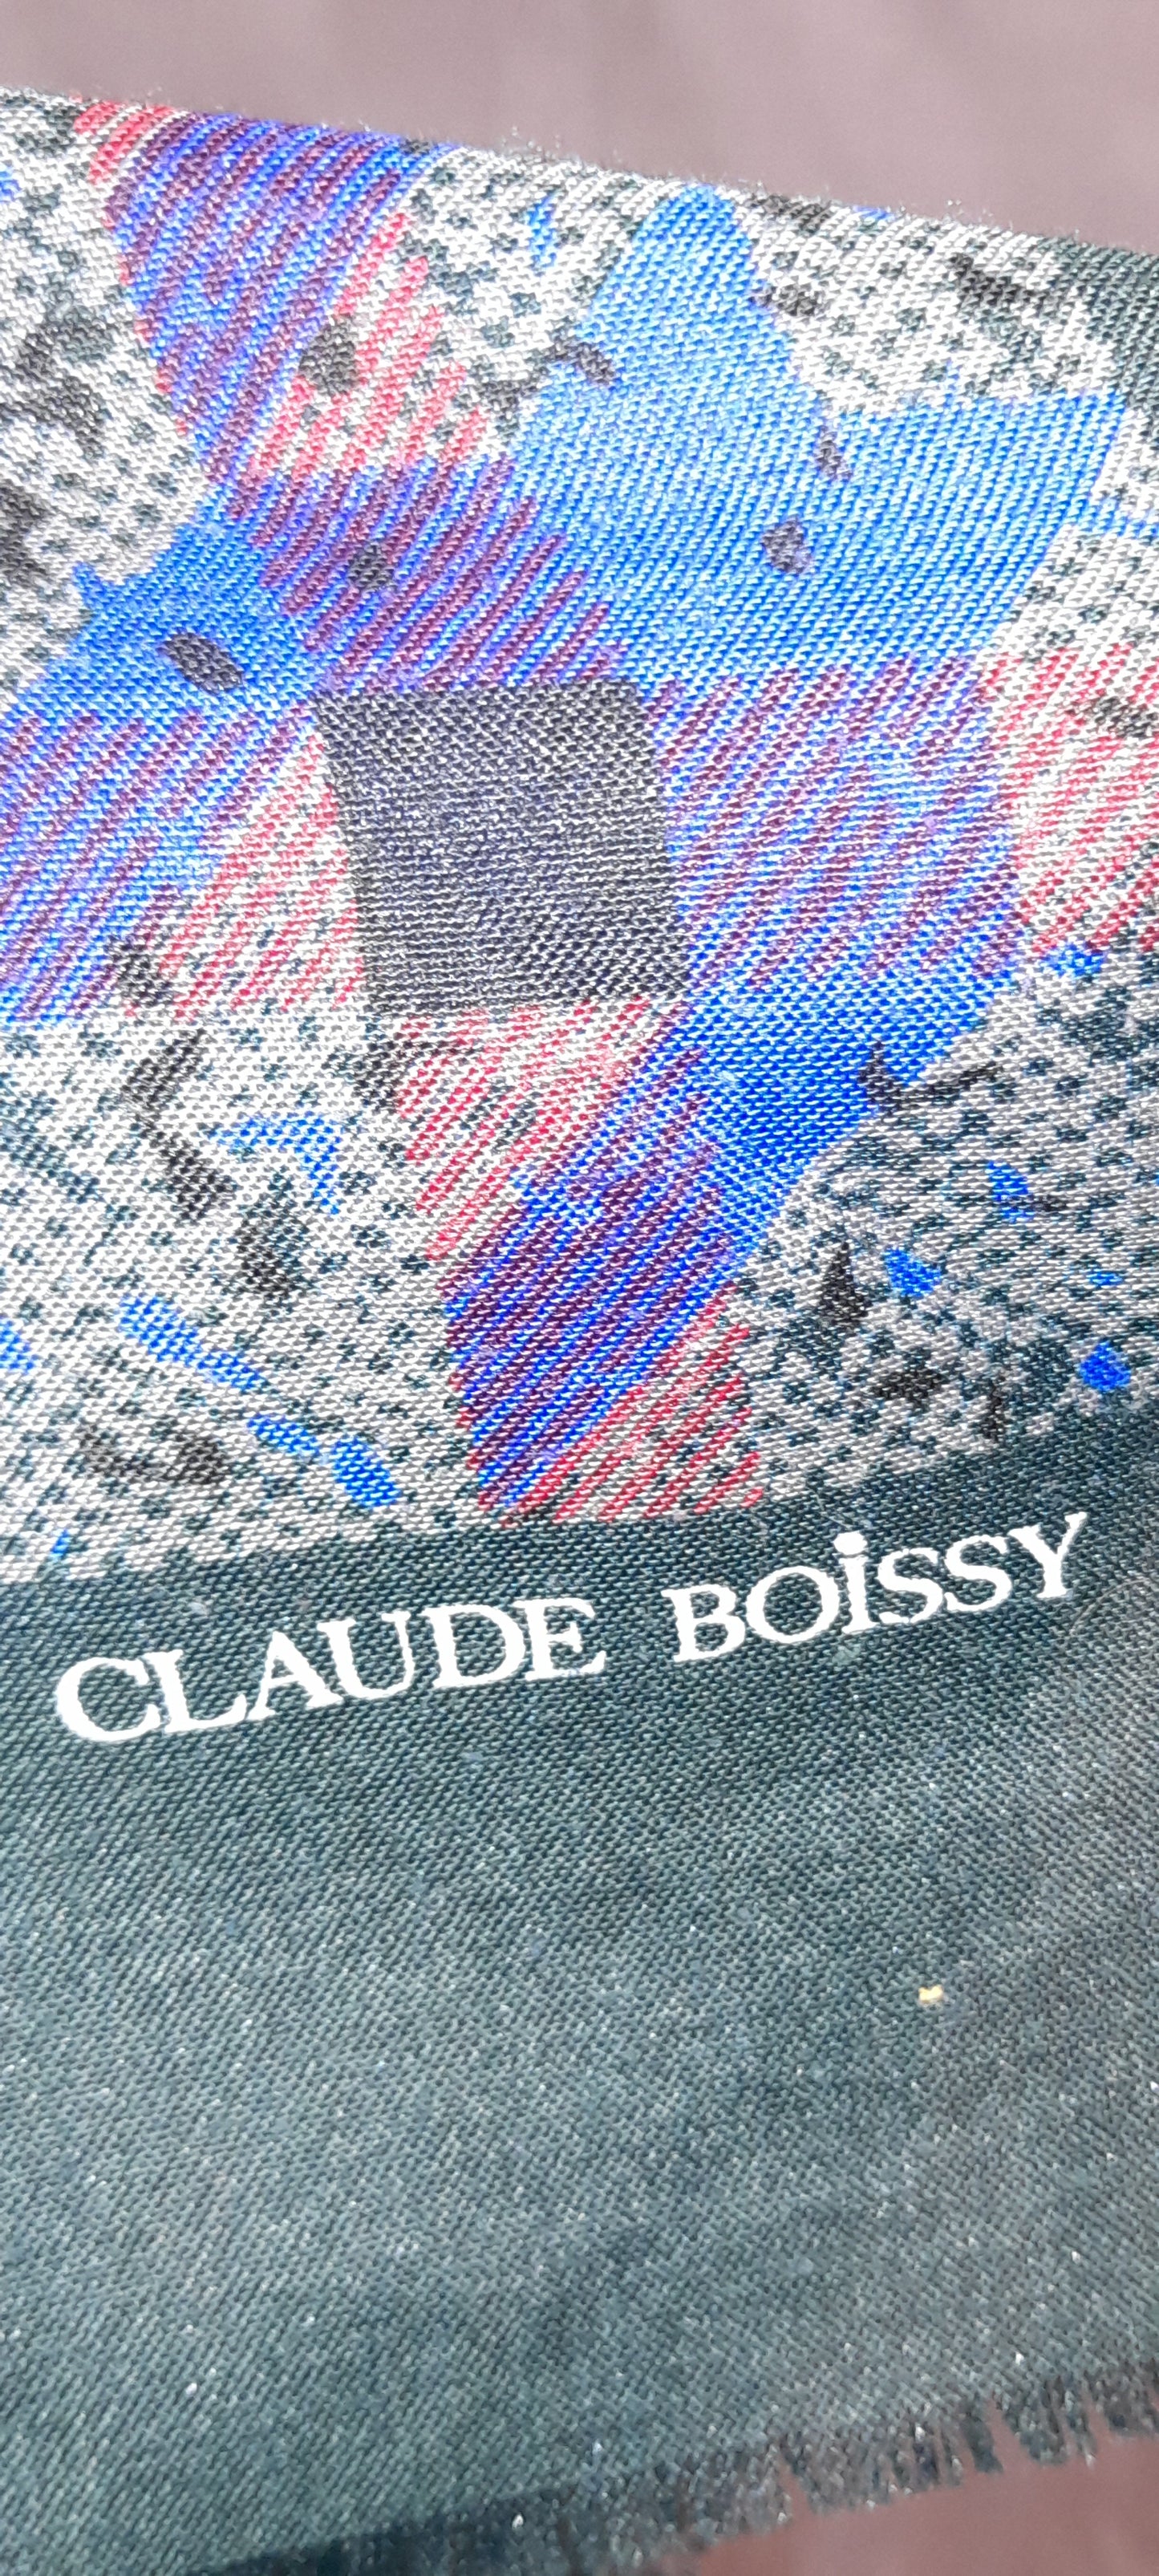 Foulard Claude Boissy